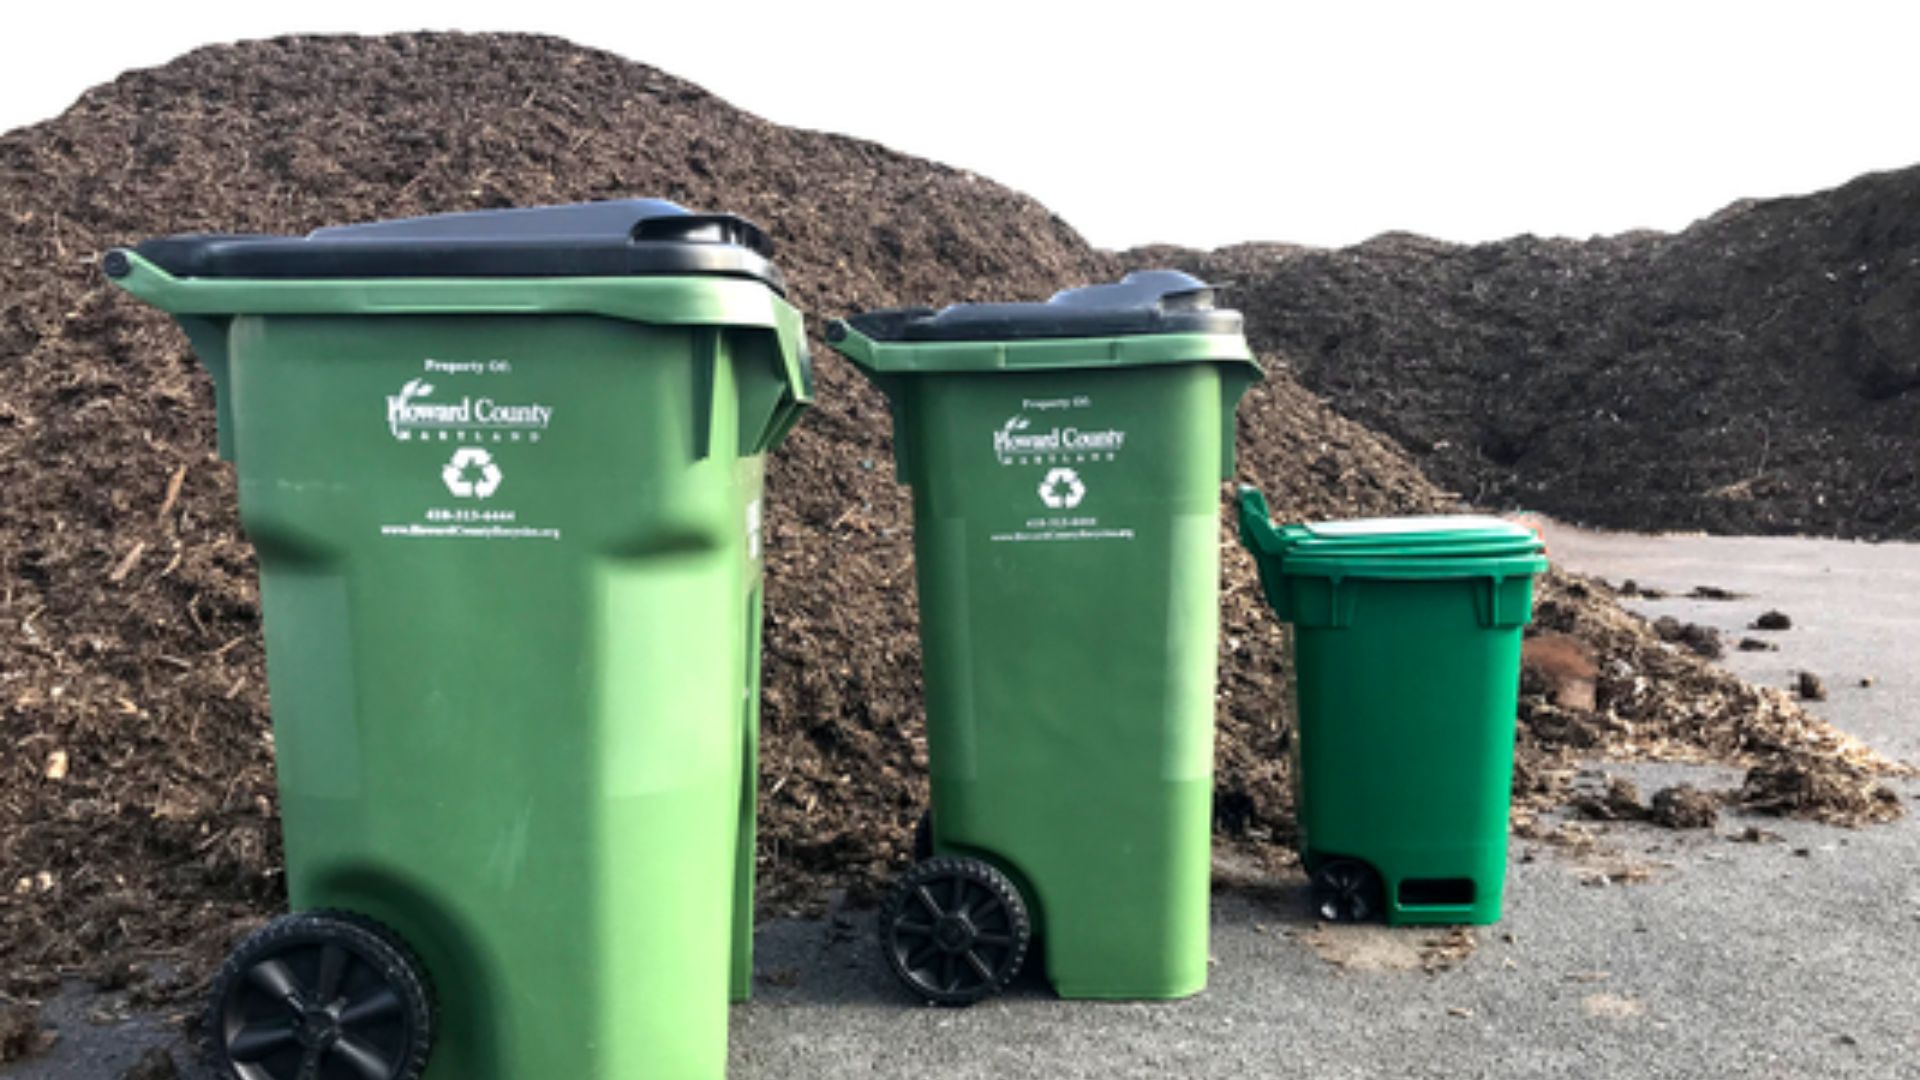 image showing waste bins kept in a hygienic ways 